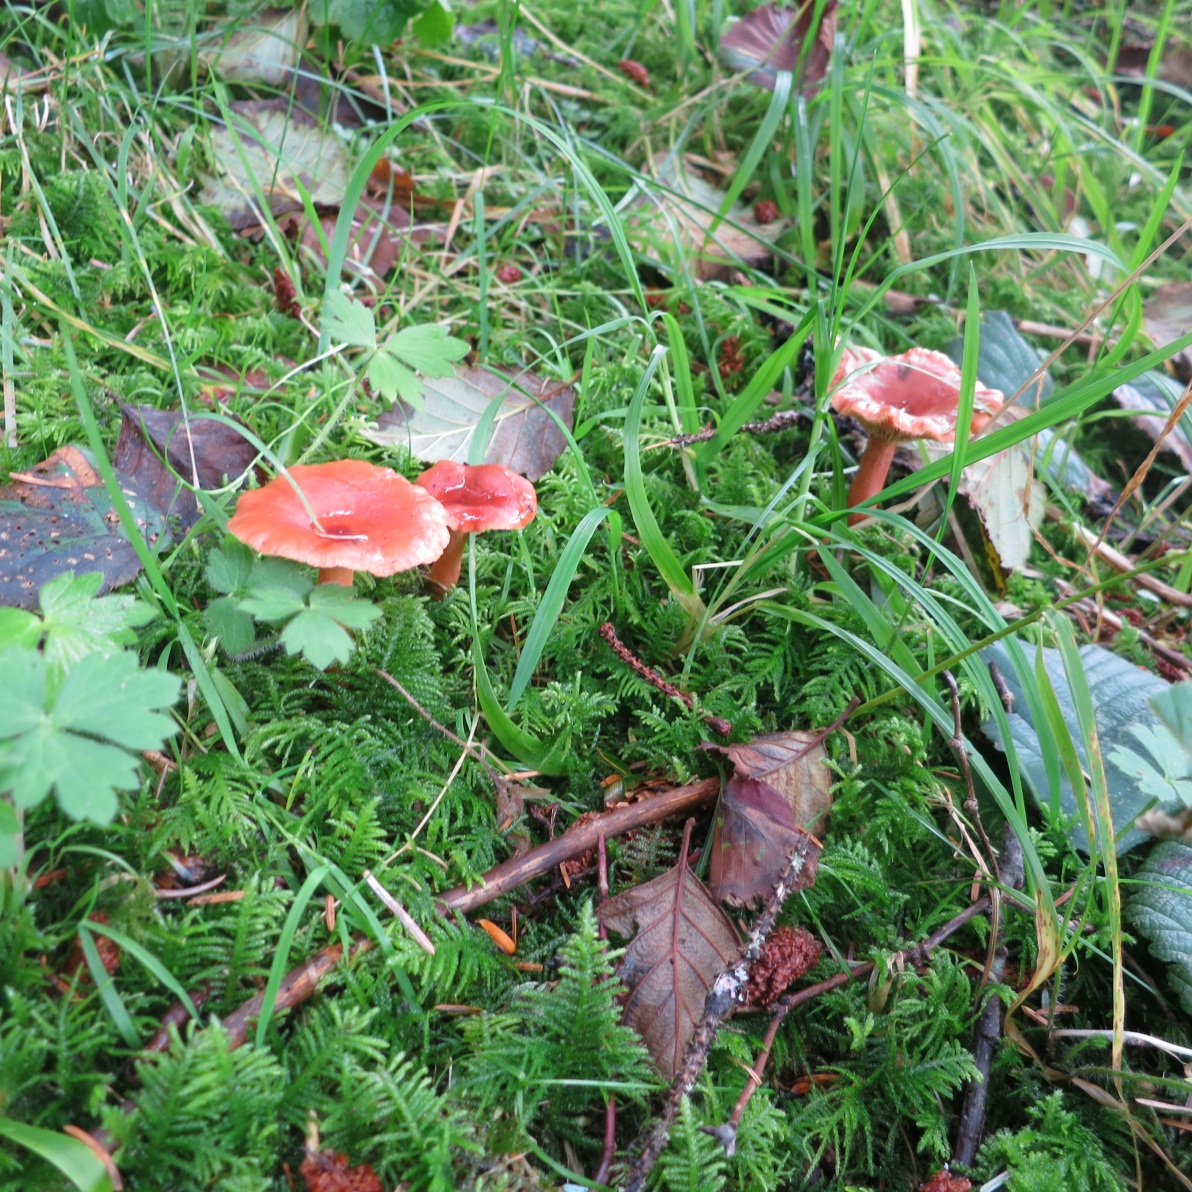 Three reddish brown mushrooms of the genus Lactarius growing in a green grassy area.